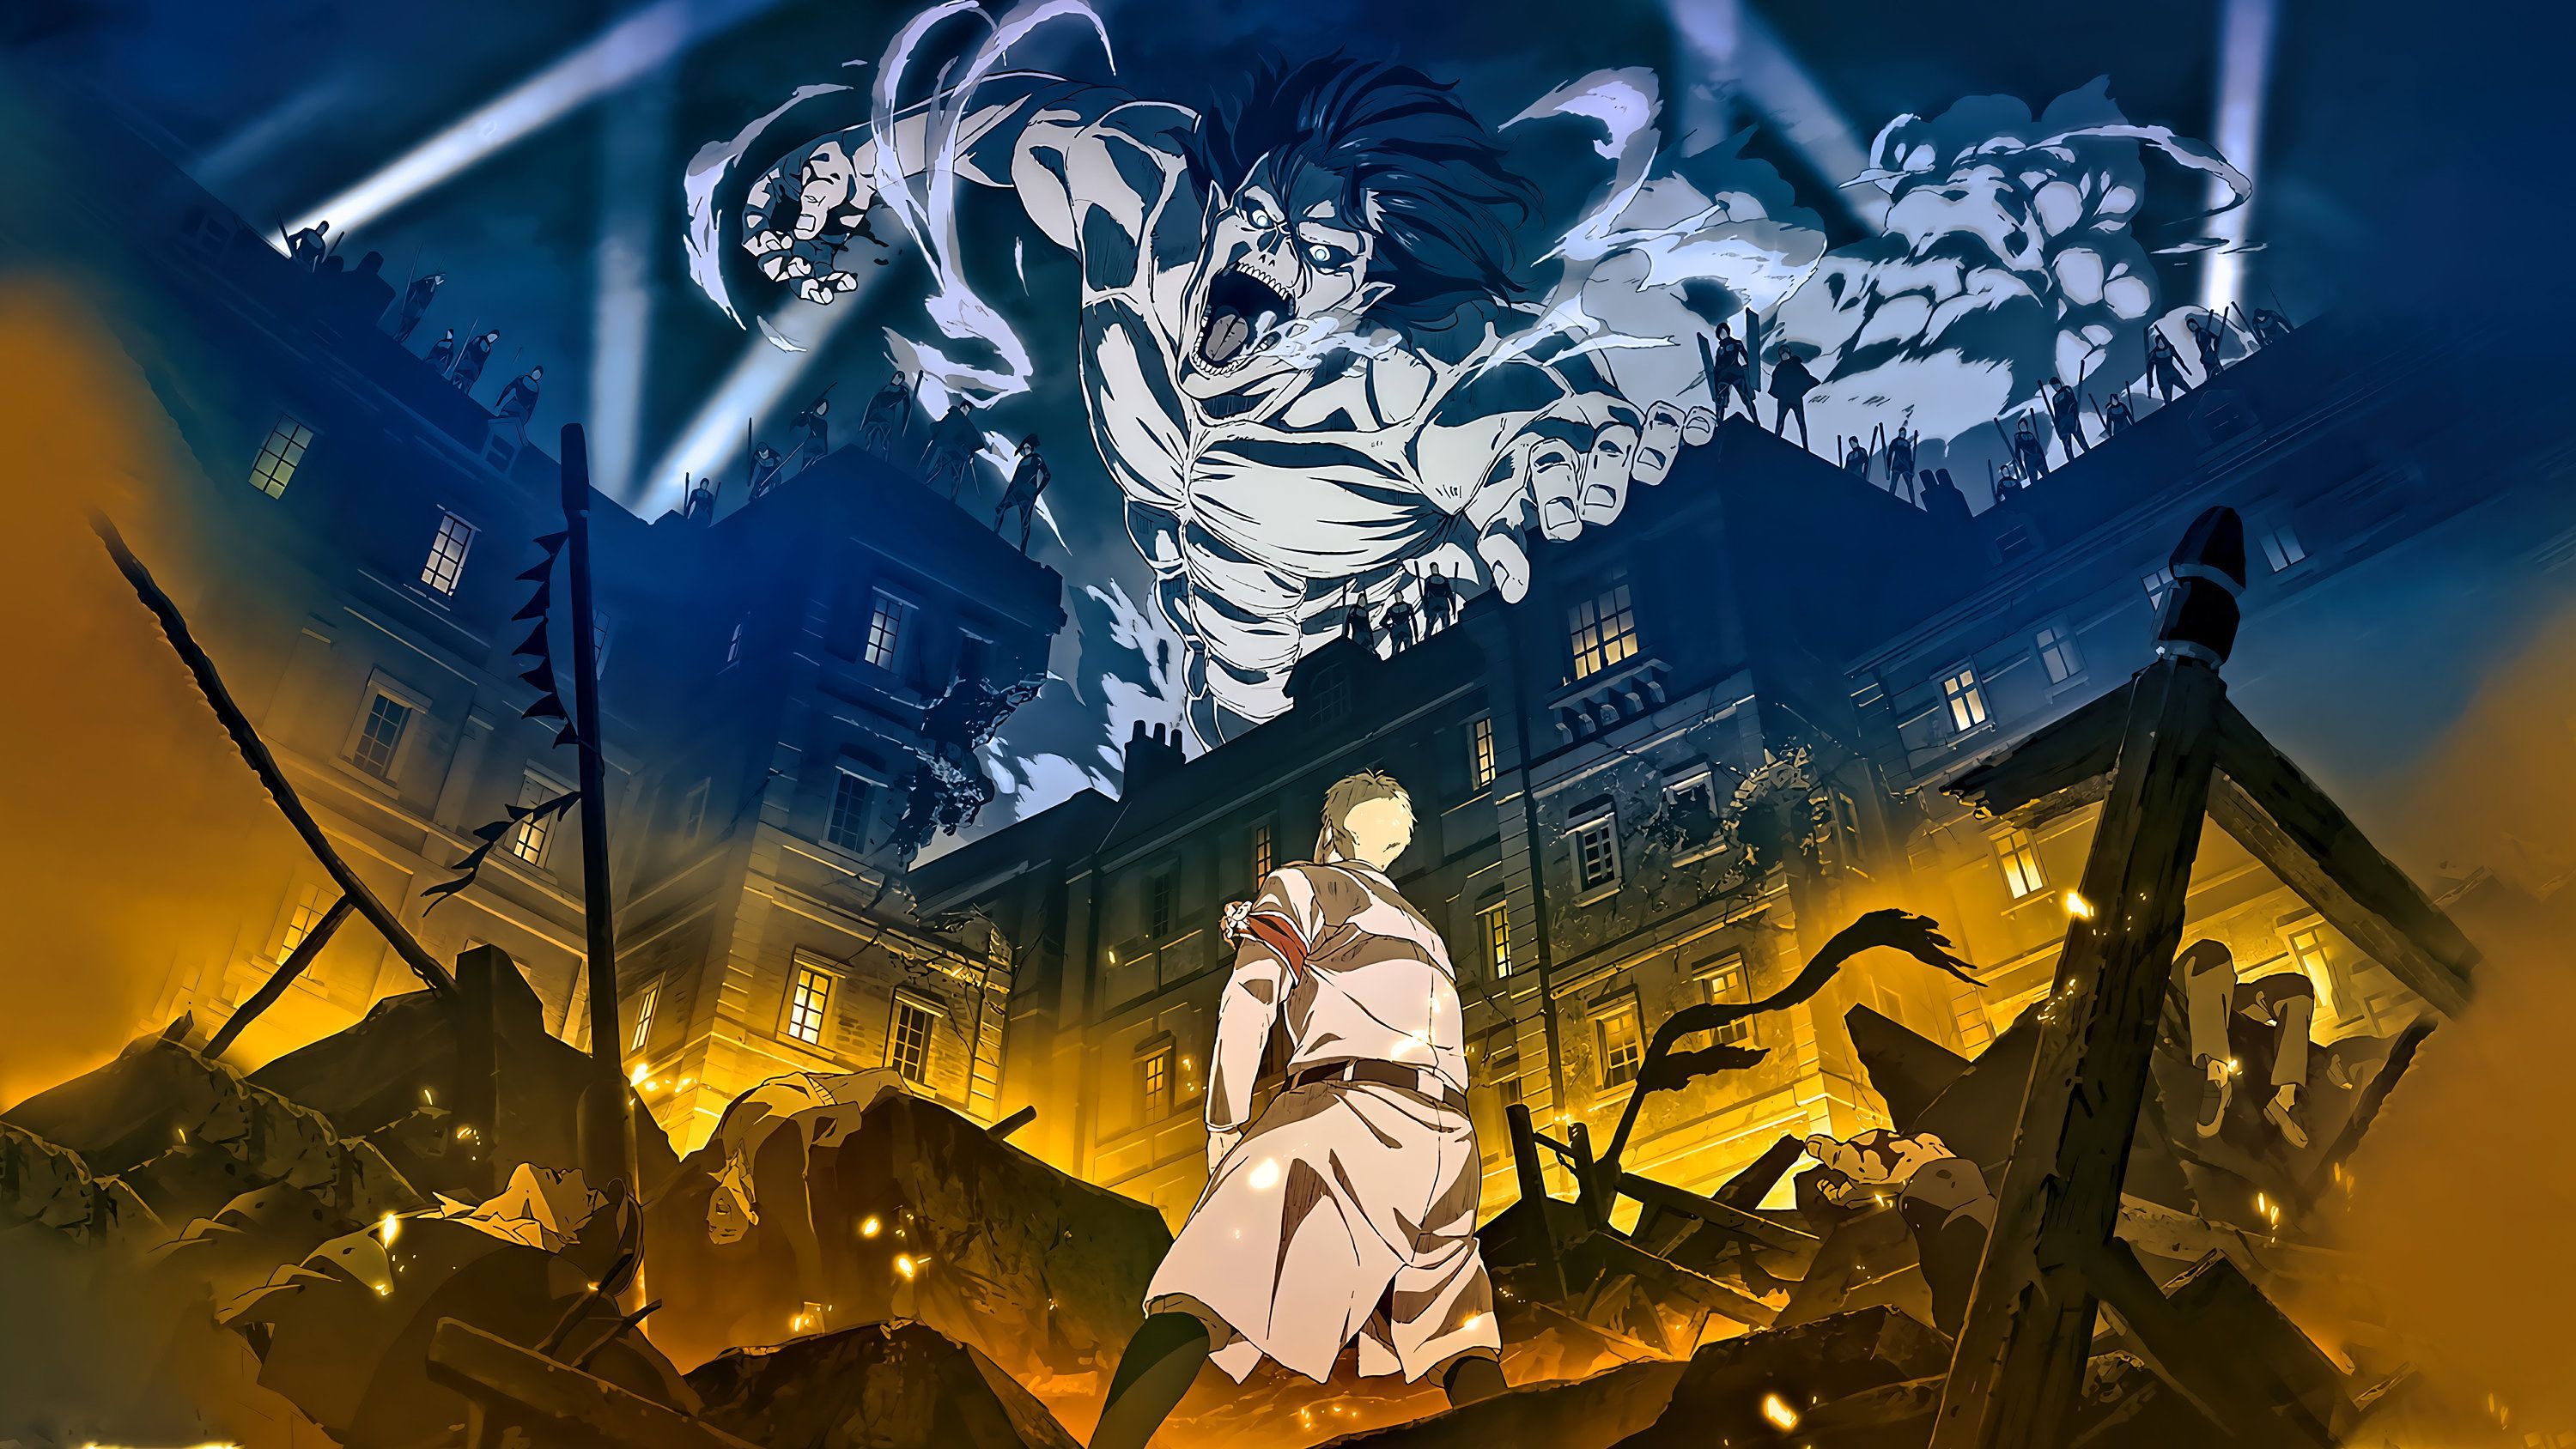 Attack on Titan 4 Season, Eren Yeager Aot Digital Print Download, anime Attack on Titan Poster, Shingeki no Kyojin Wallpaper. Shingeki no kyojin wallpaper, Attack on titan wallpaper, Attack